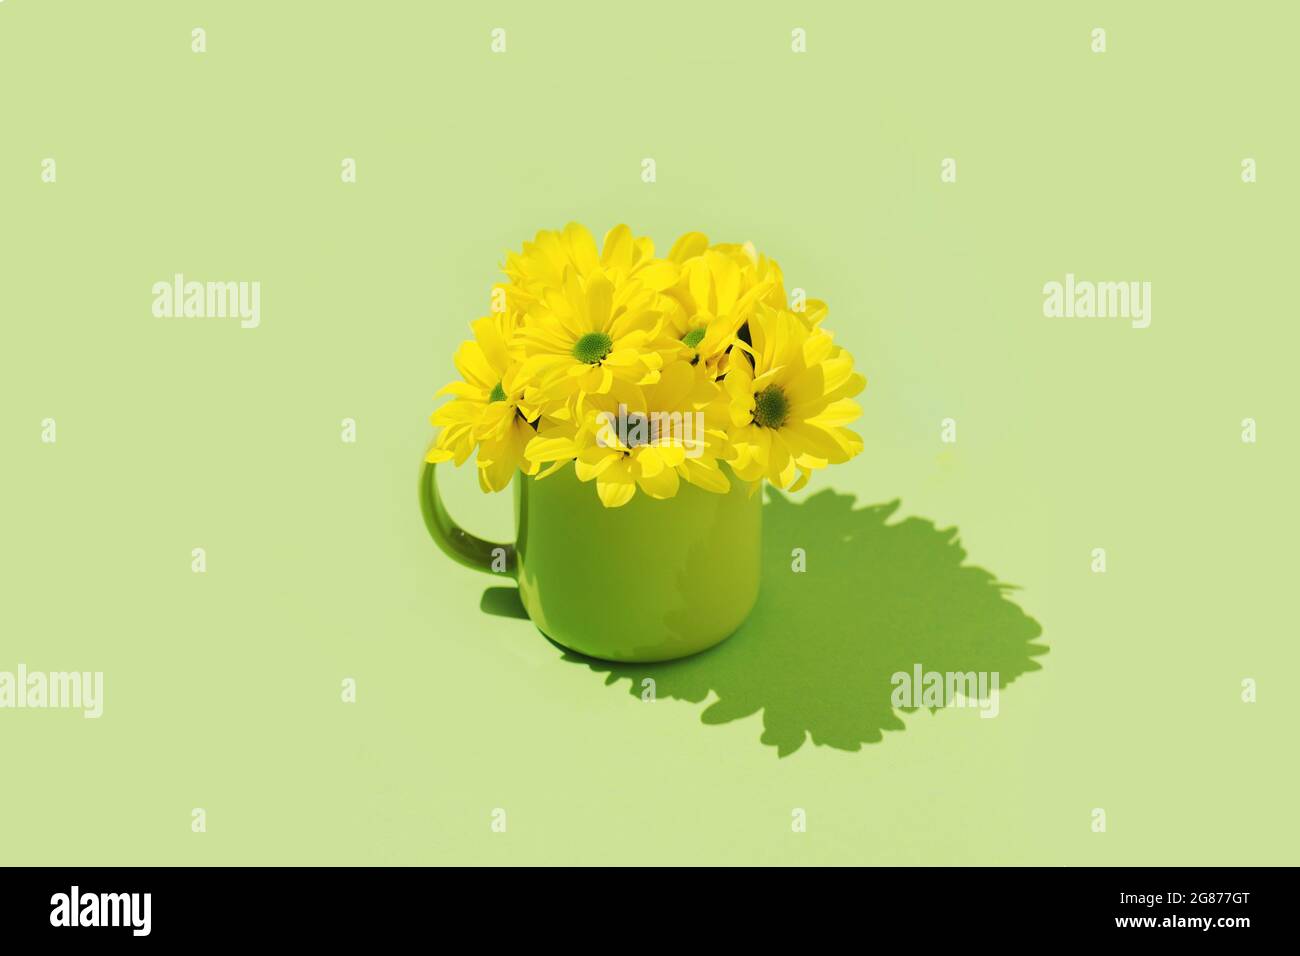 Amarillo margarita flores camomila fondo verde concepto mínimo fondo cubrir imagen papel tapiz Foto de stock